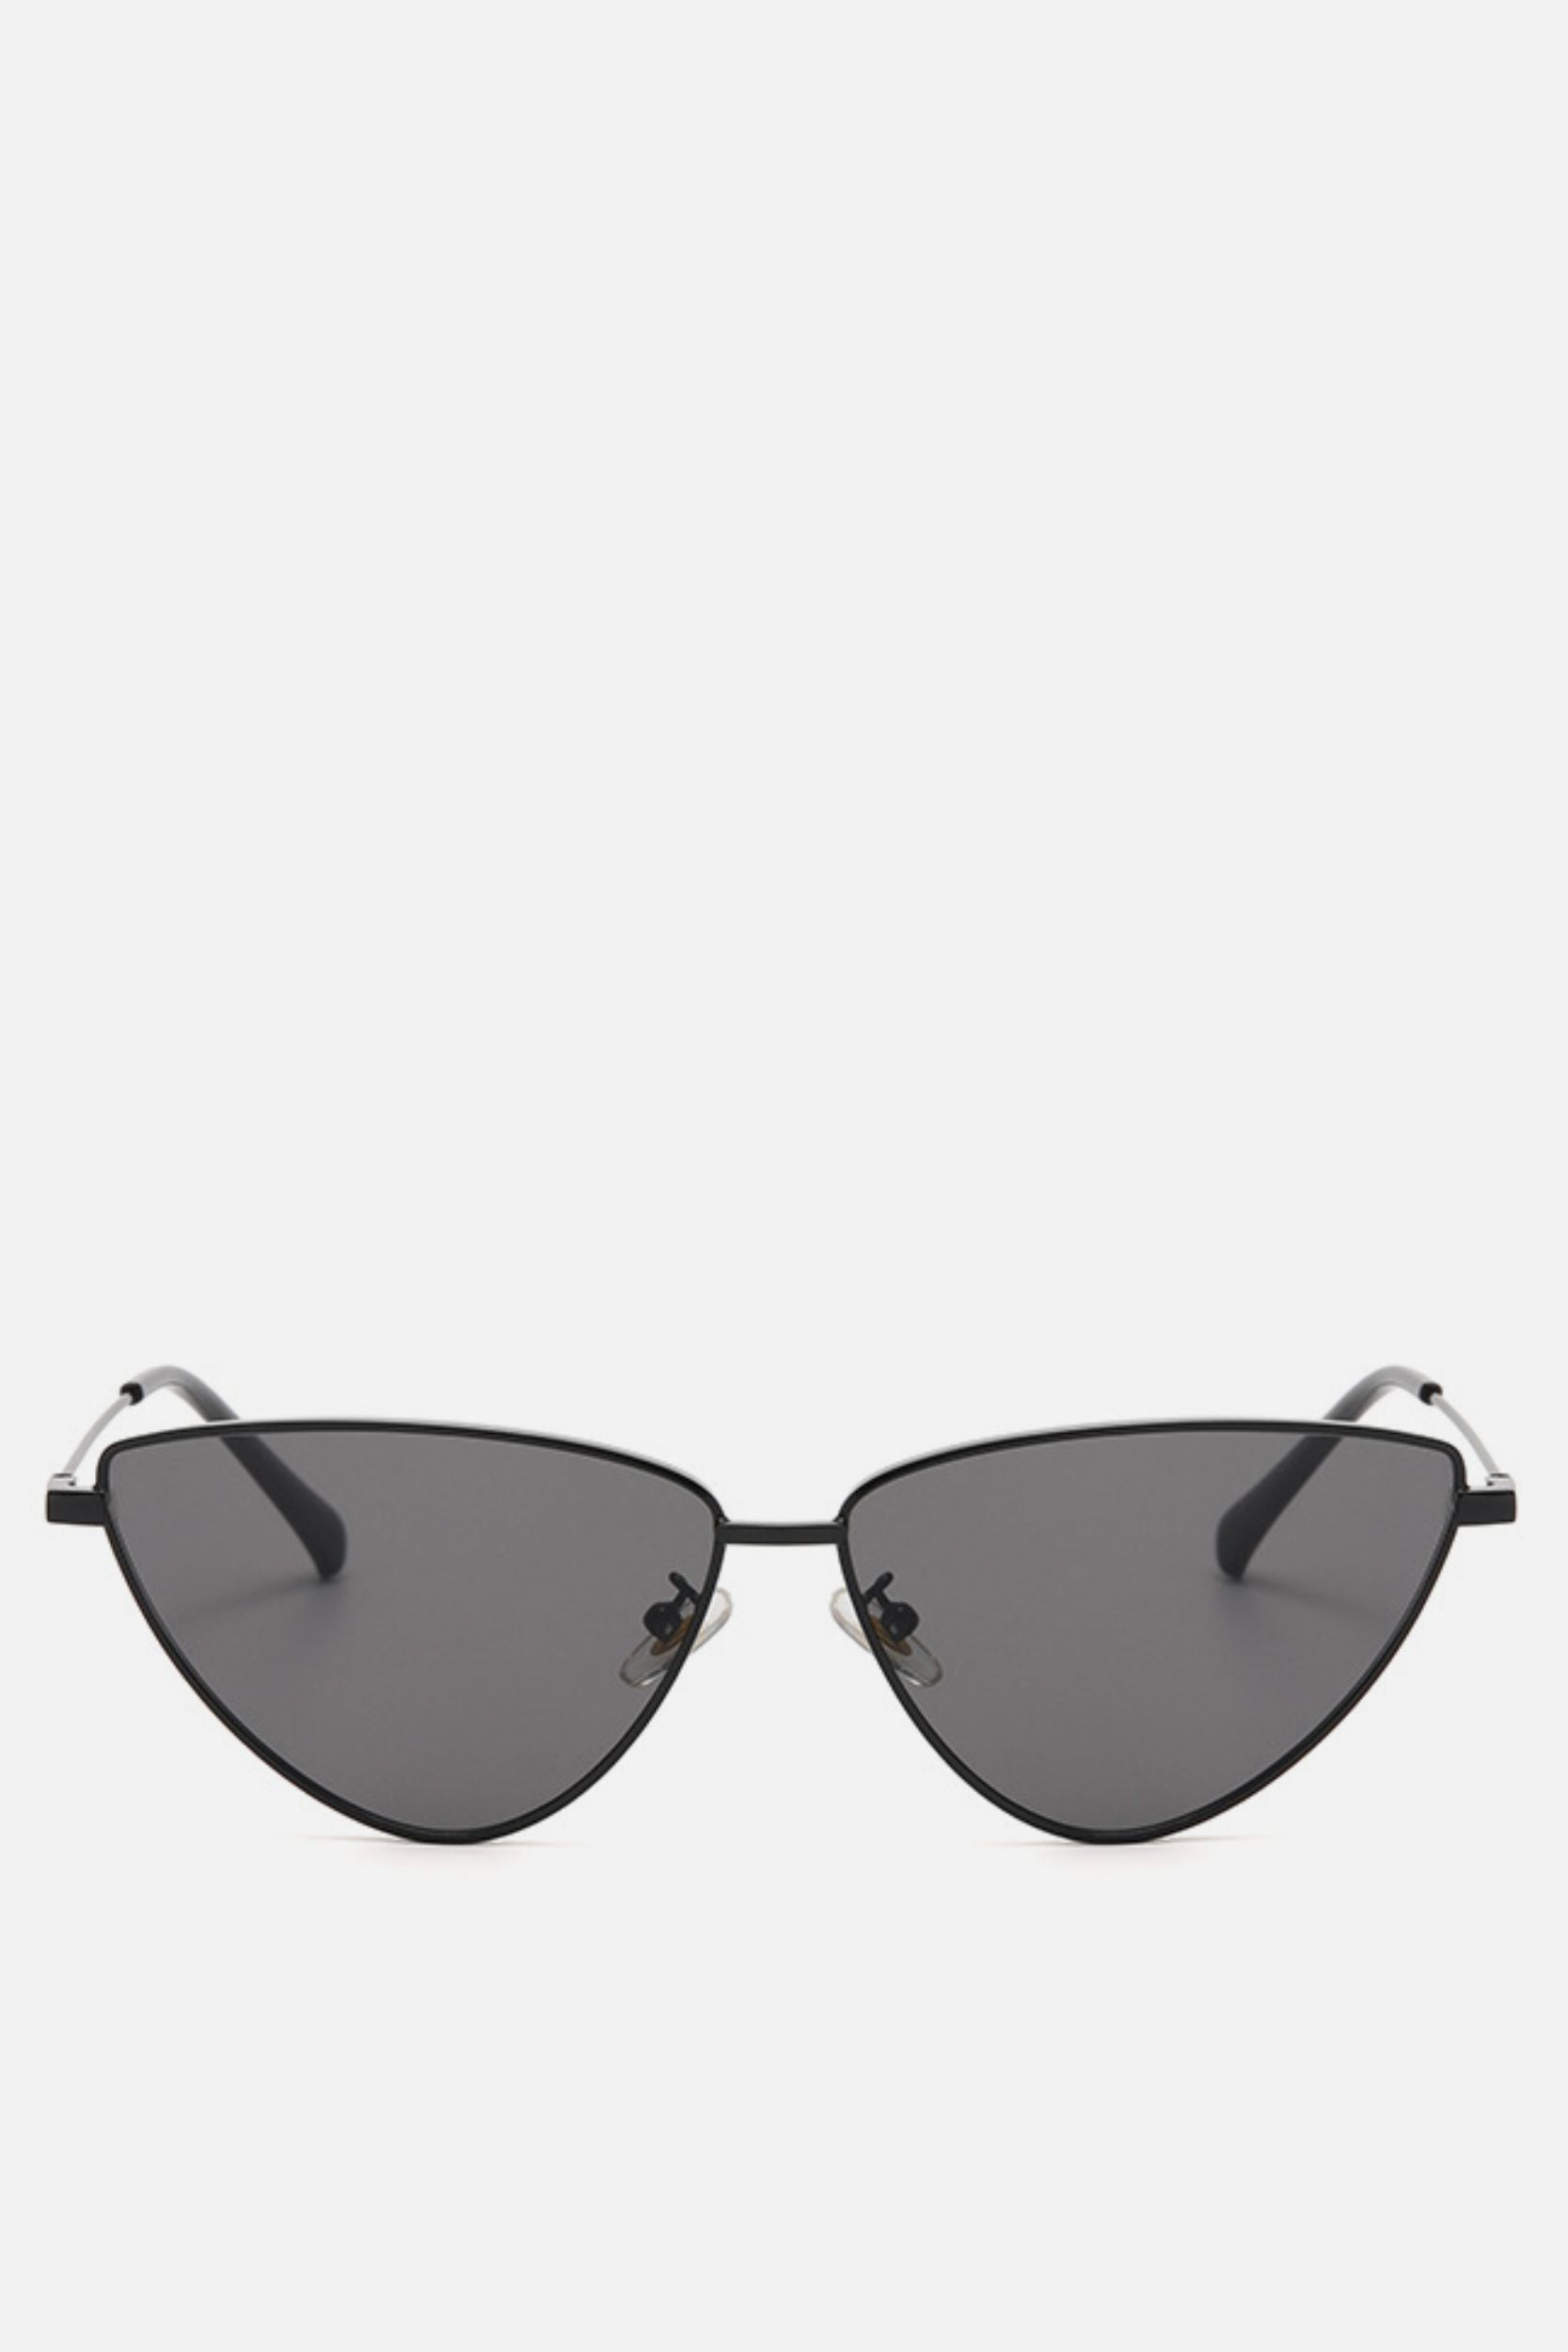 MONTUIRI Black Cat Eye Sunglasses